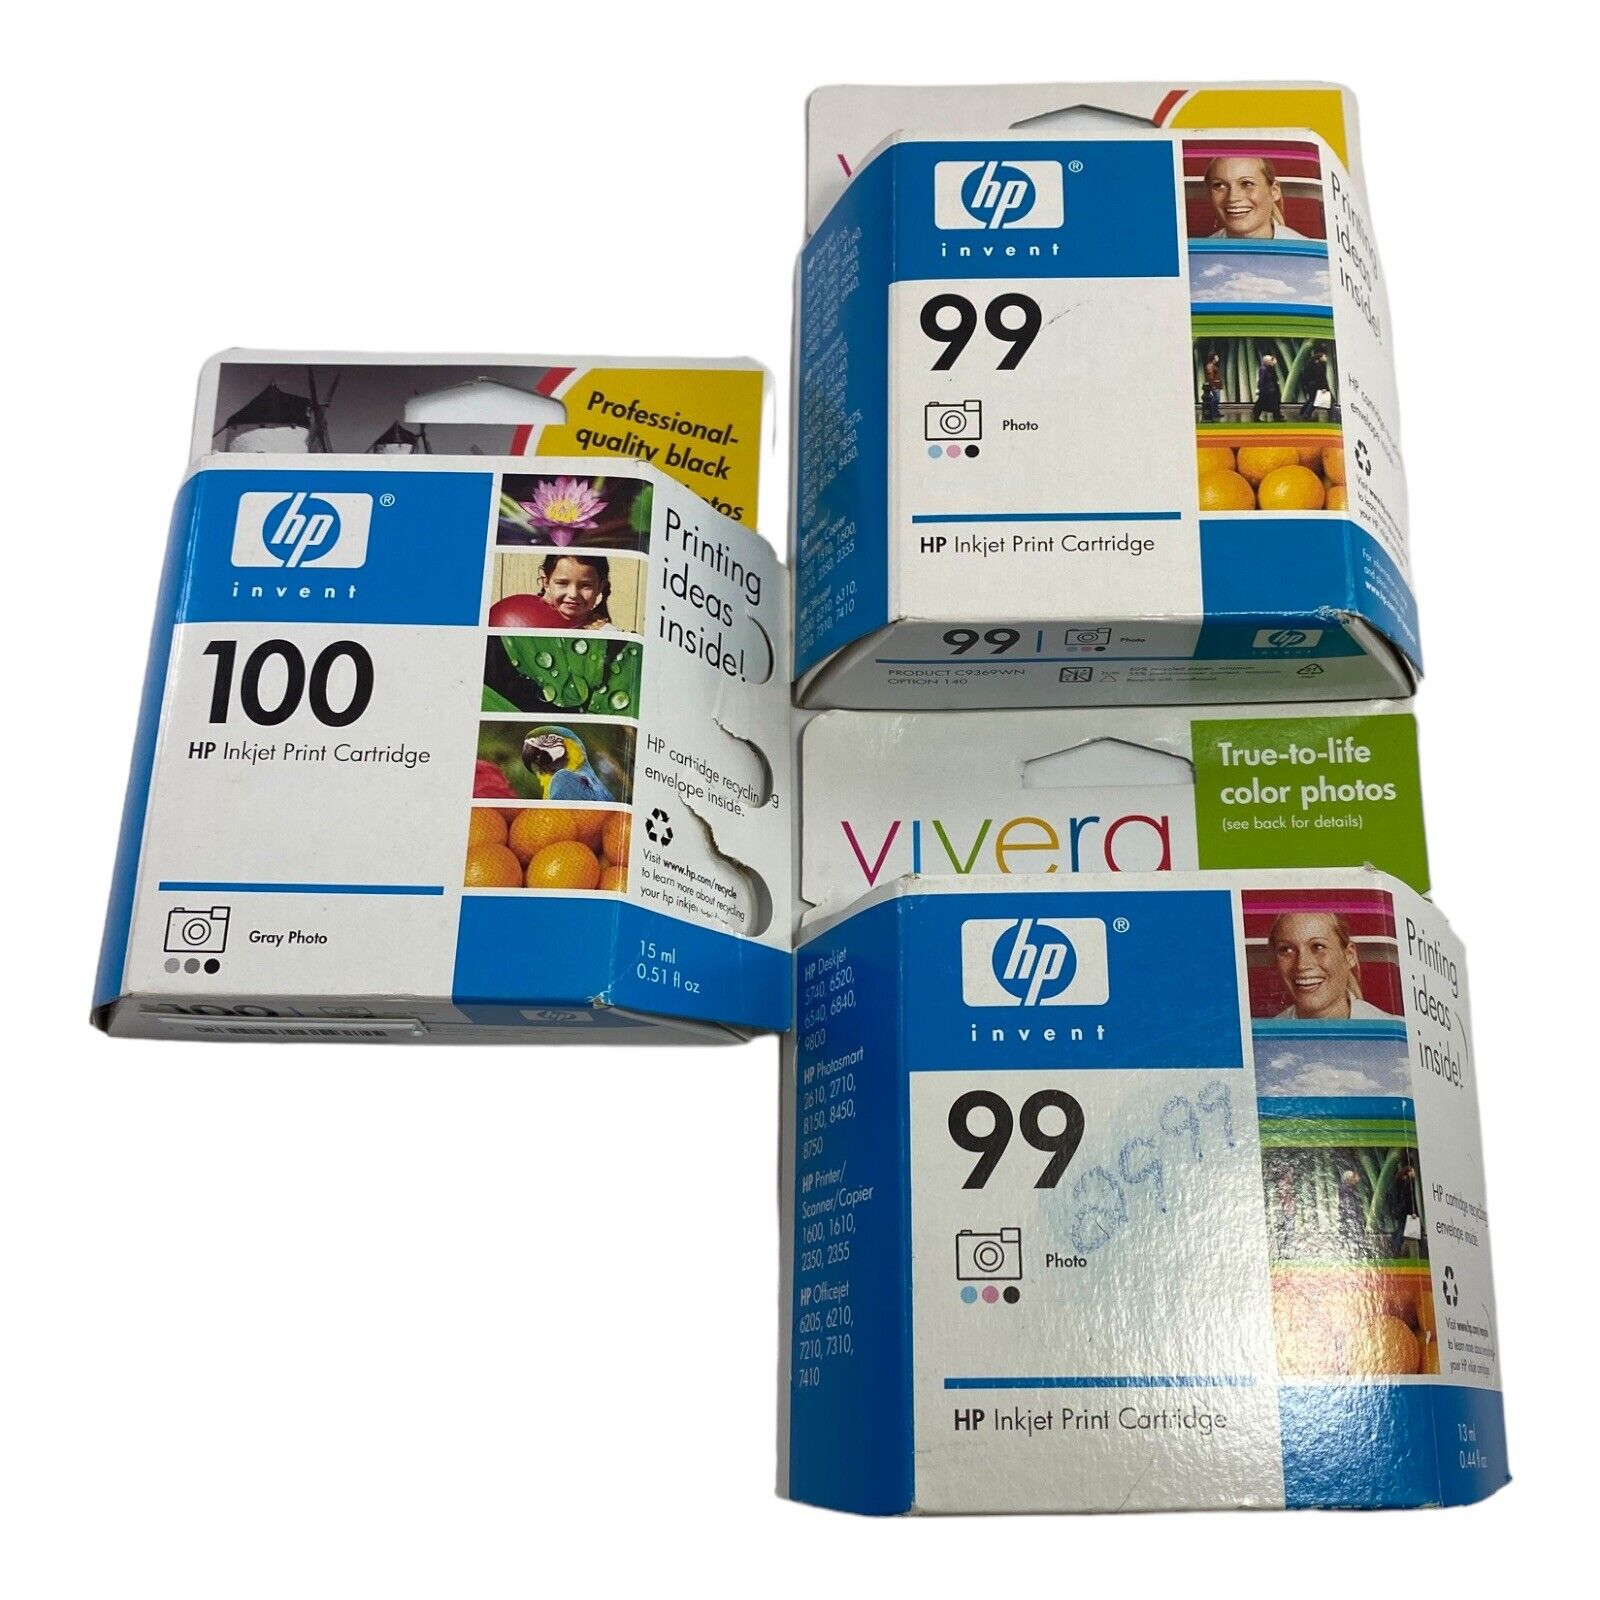 Lot Genuine HP Inkjet Print Cartridge 99 Vivera &100 Exp 2006/ 2008 Sealed Boxes